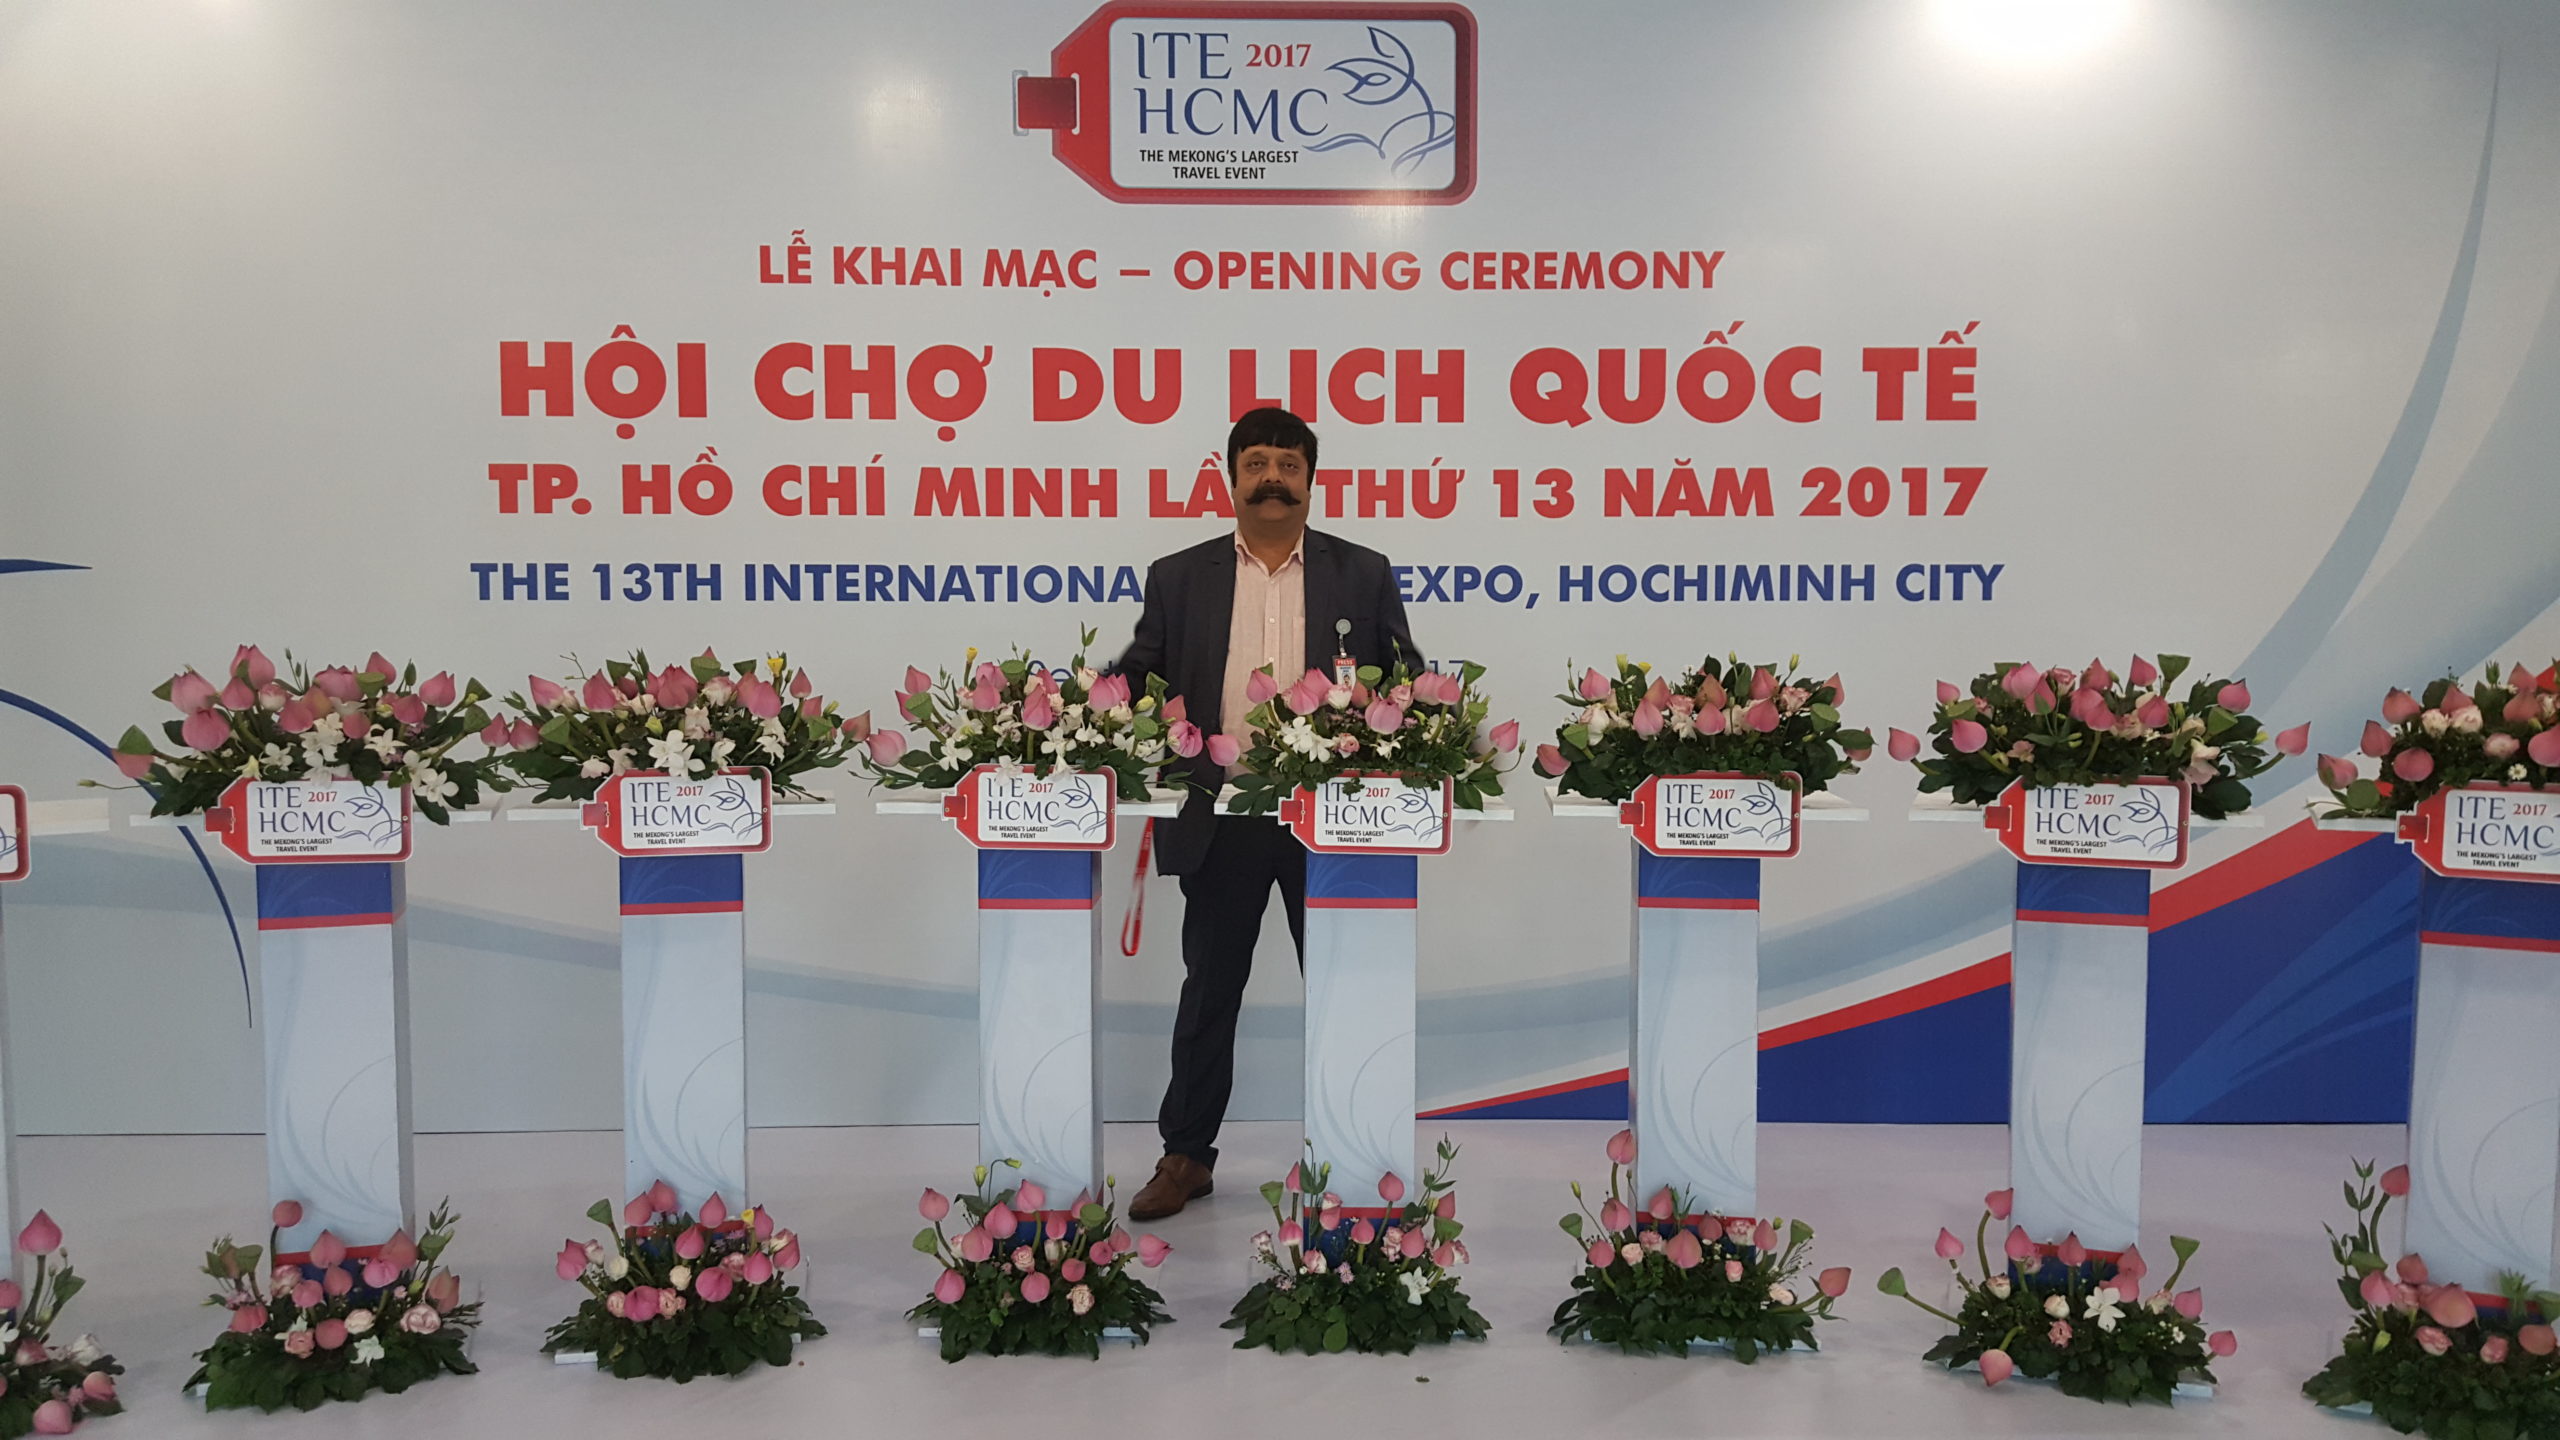 Vietnam Tourism ITE HCMC 2017